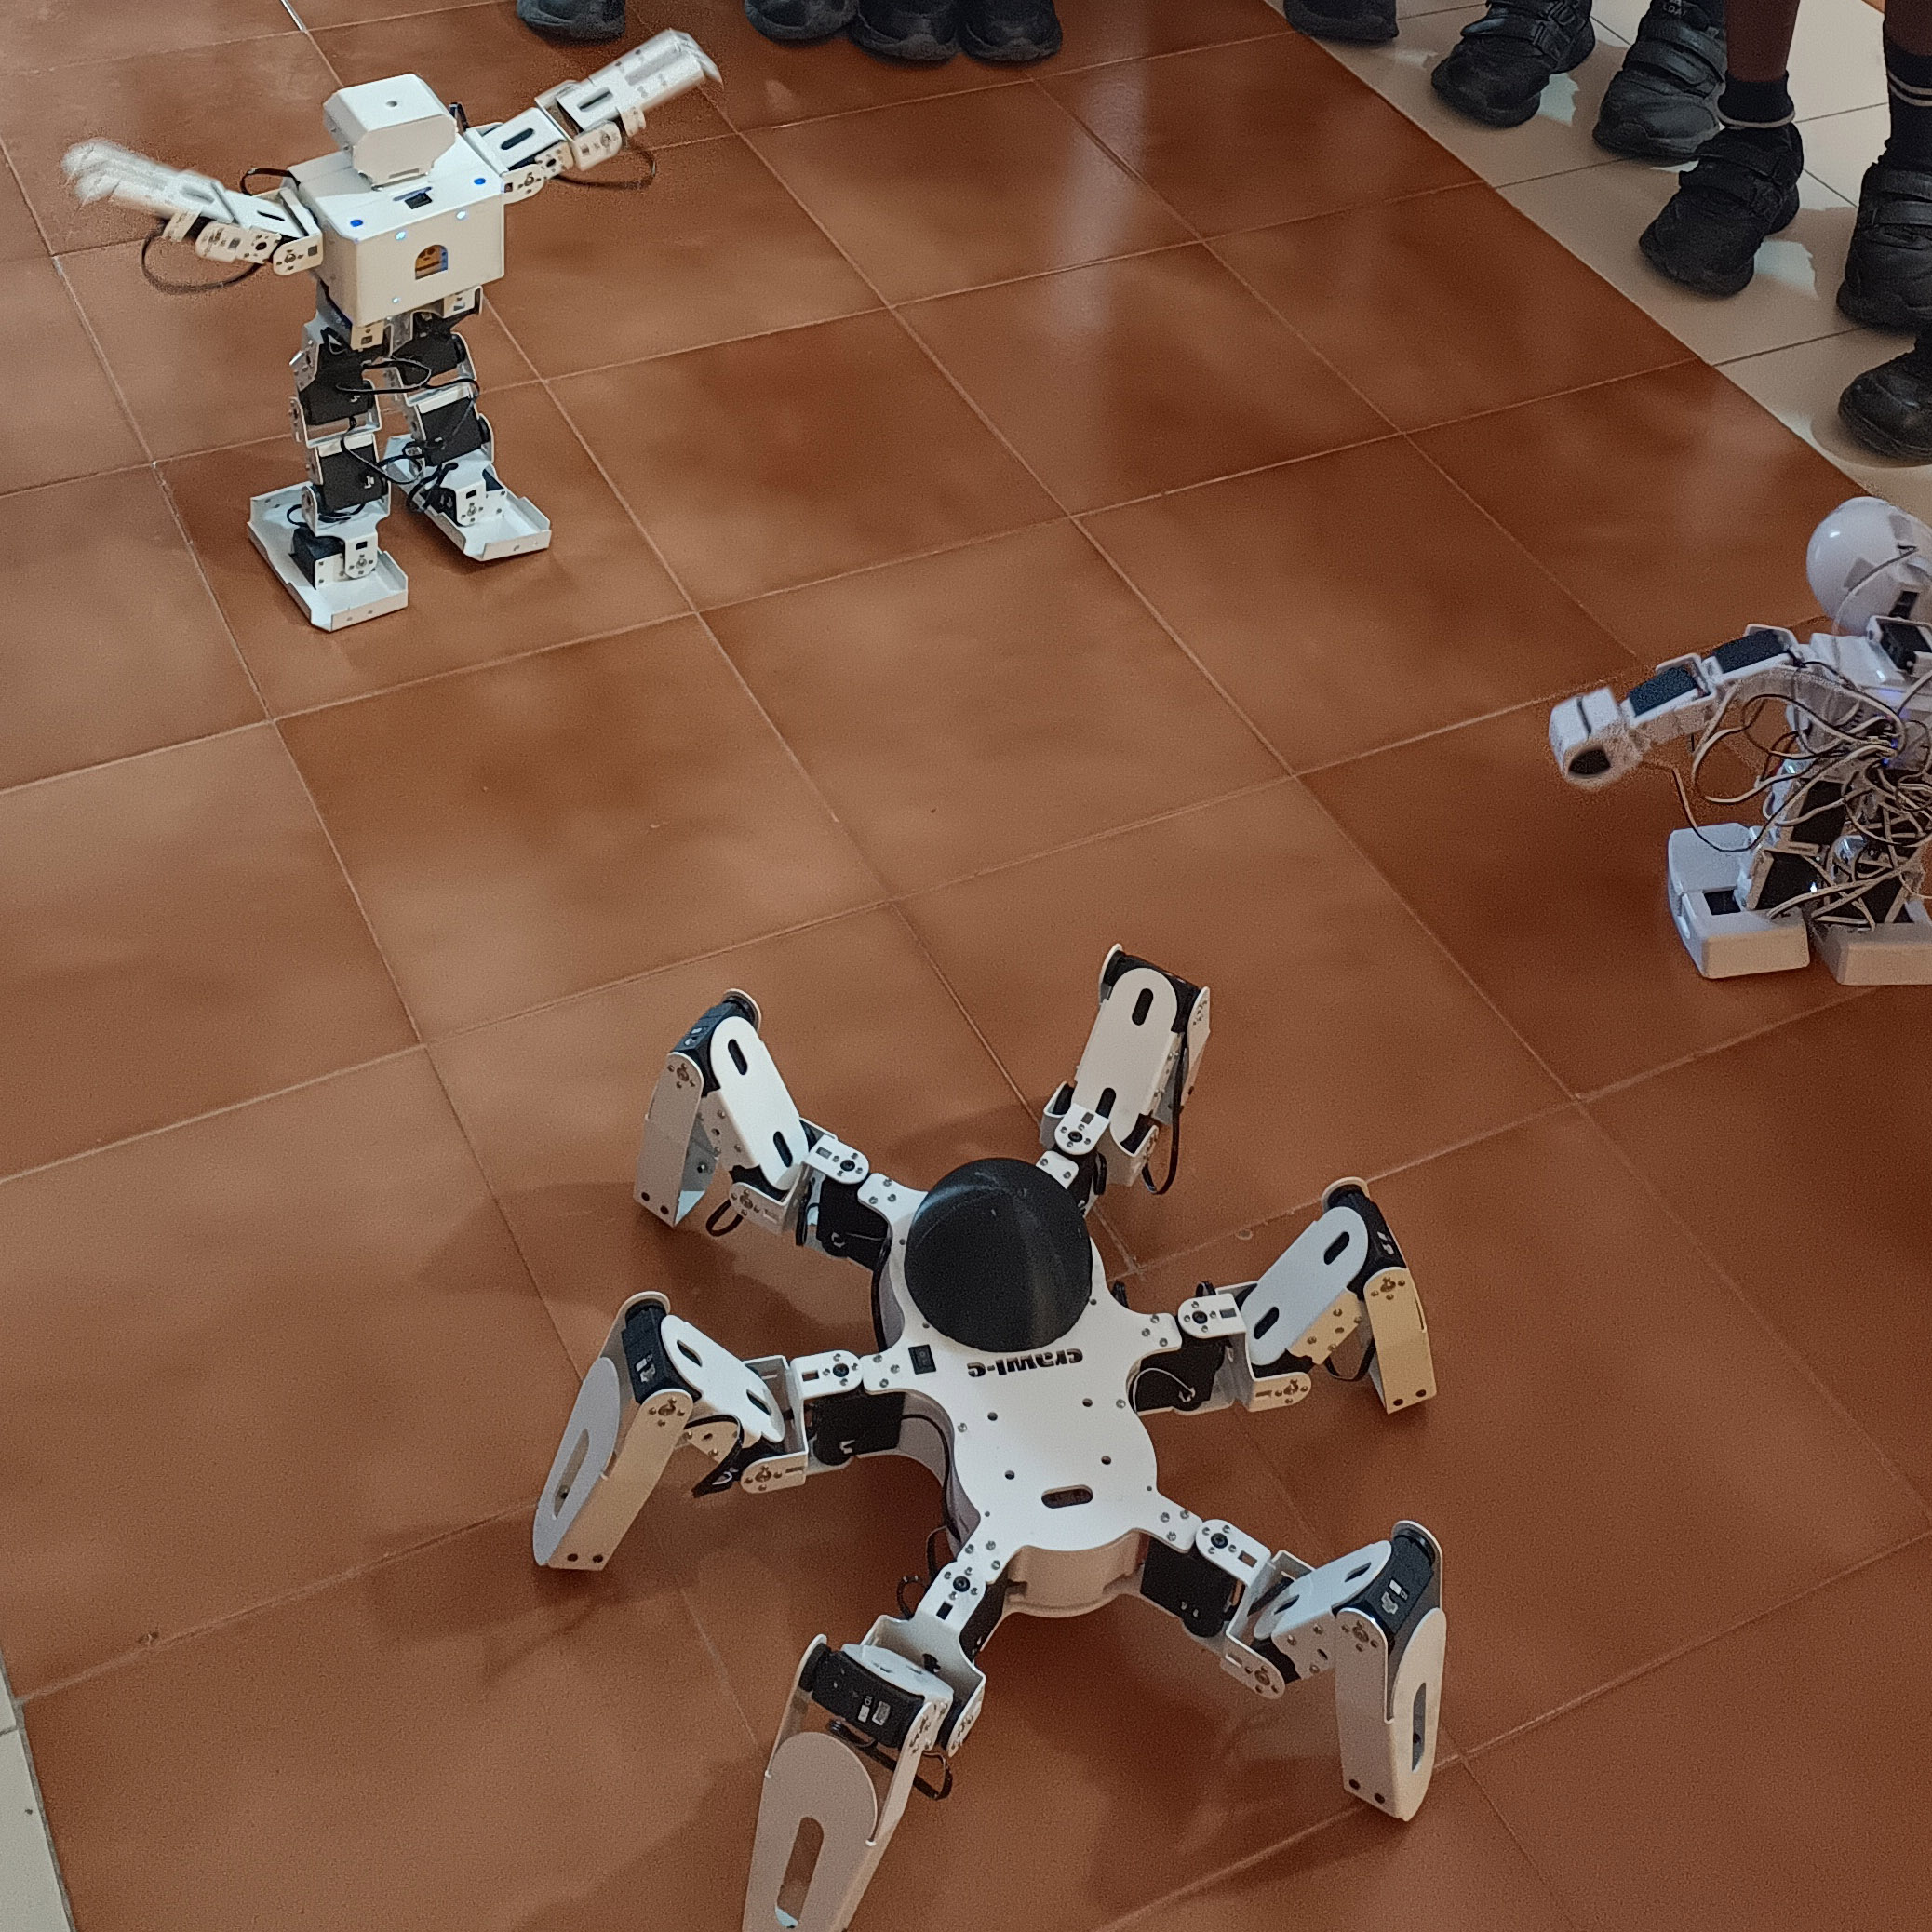 3 K square edutainment  robotics playing continuously